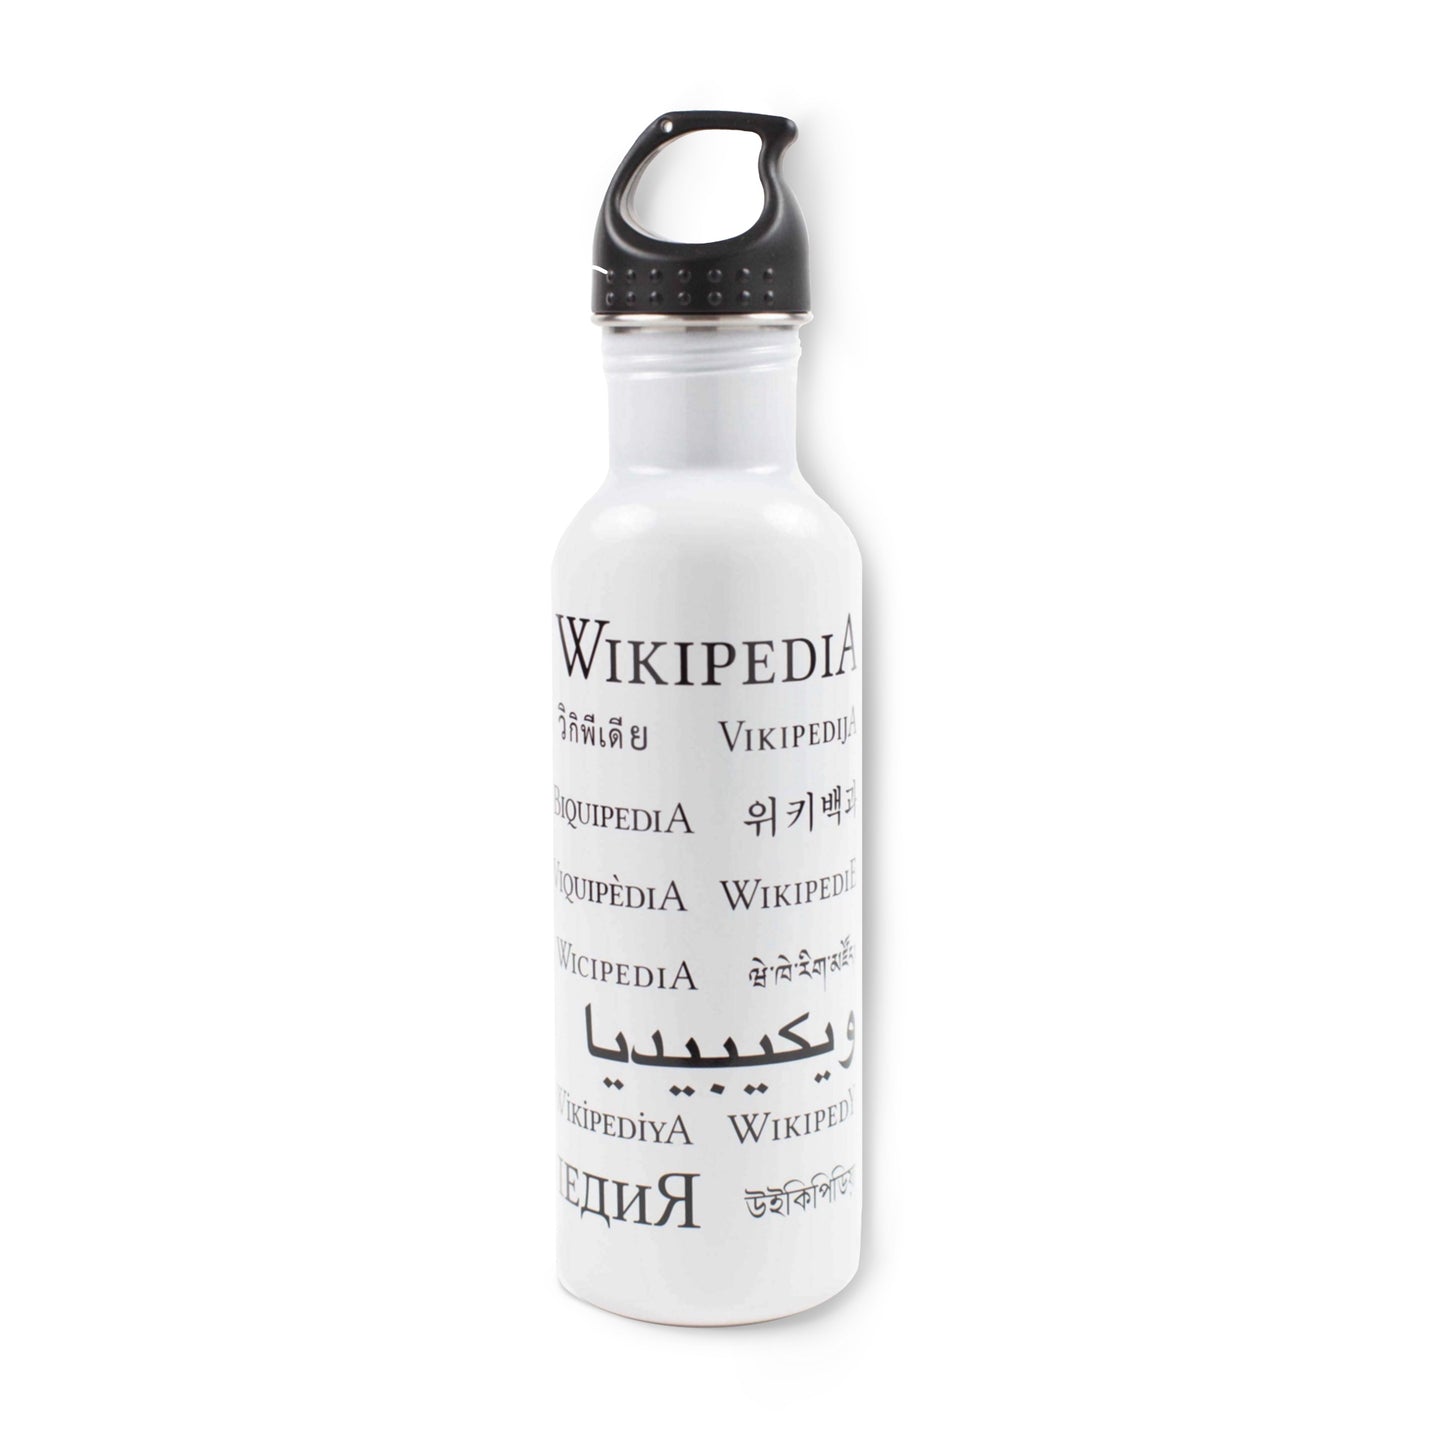 「Wikipedia」言語のウォーター・ボトル